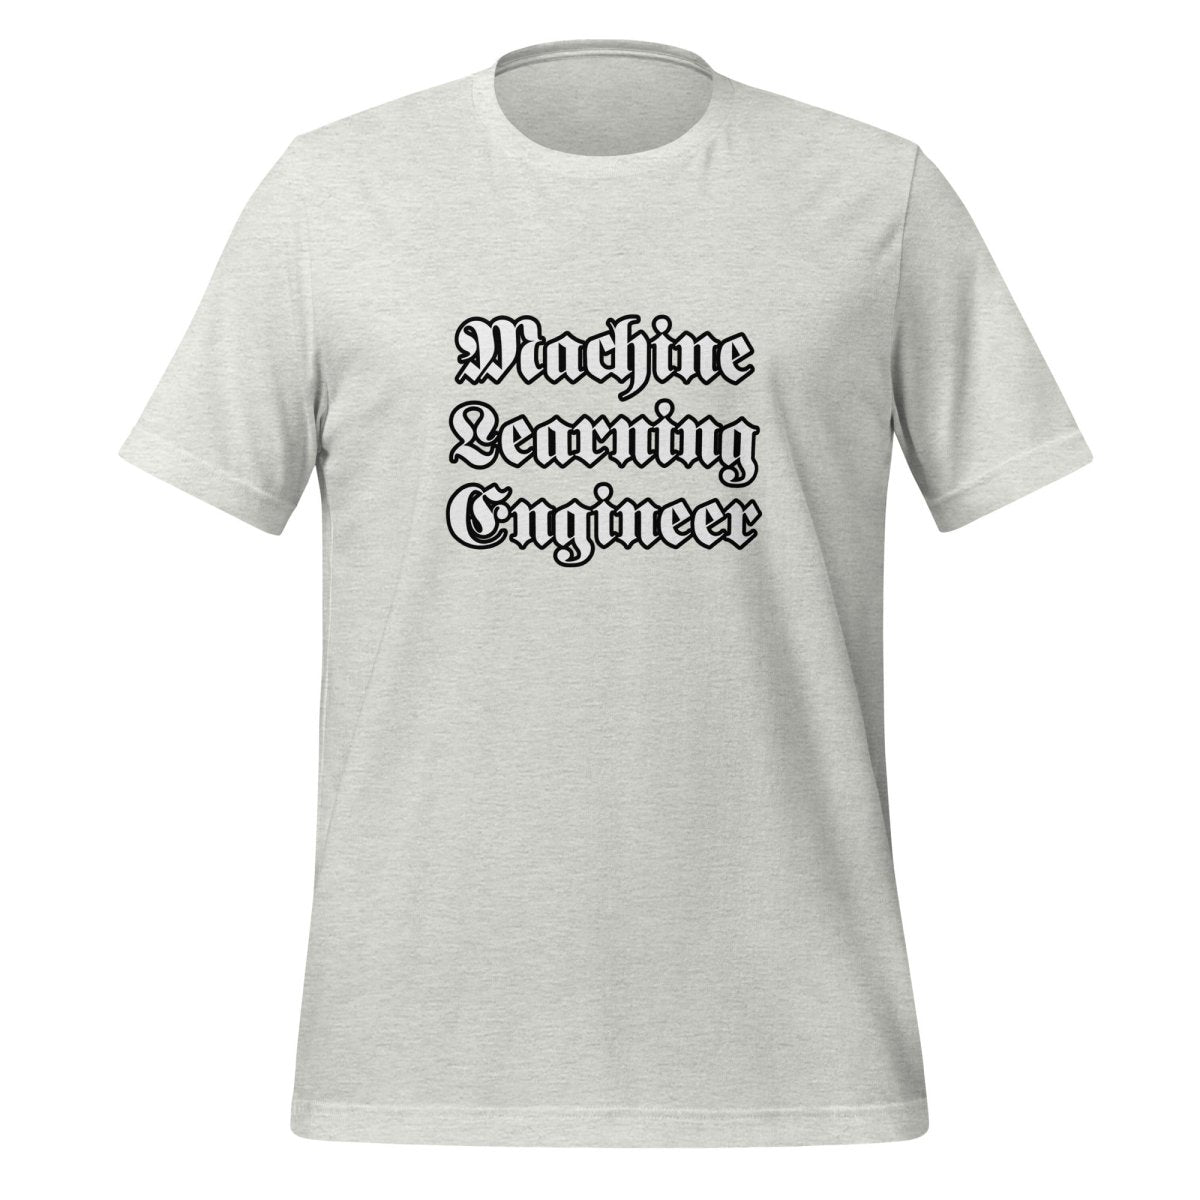 Machine Learning Engineer Gothic T - Shirt (unisex) - AI Store